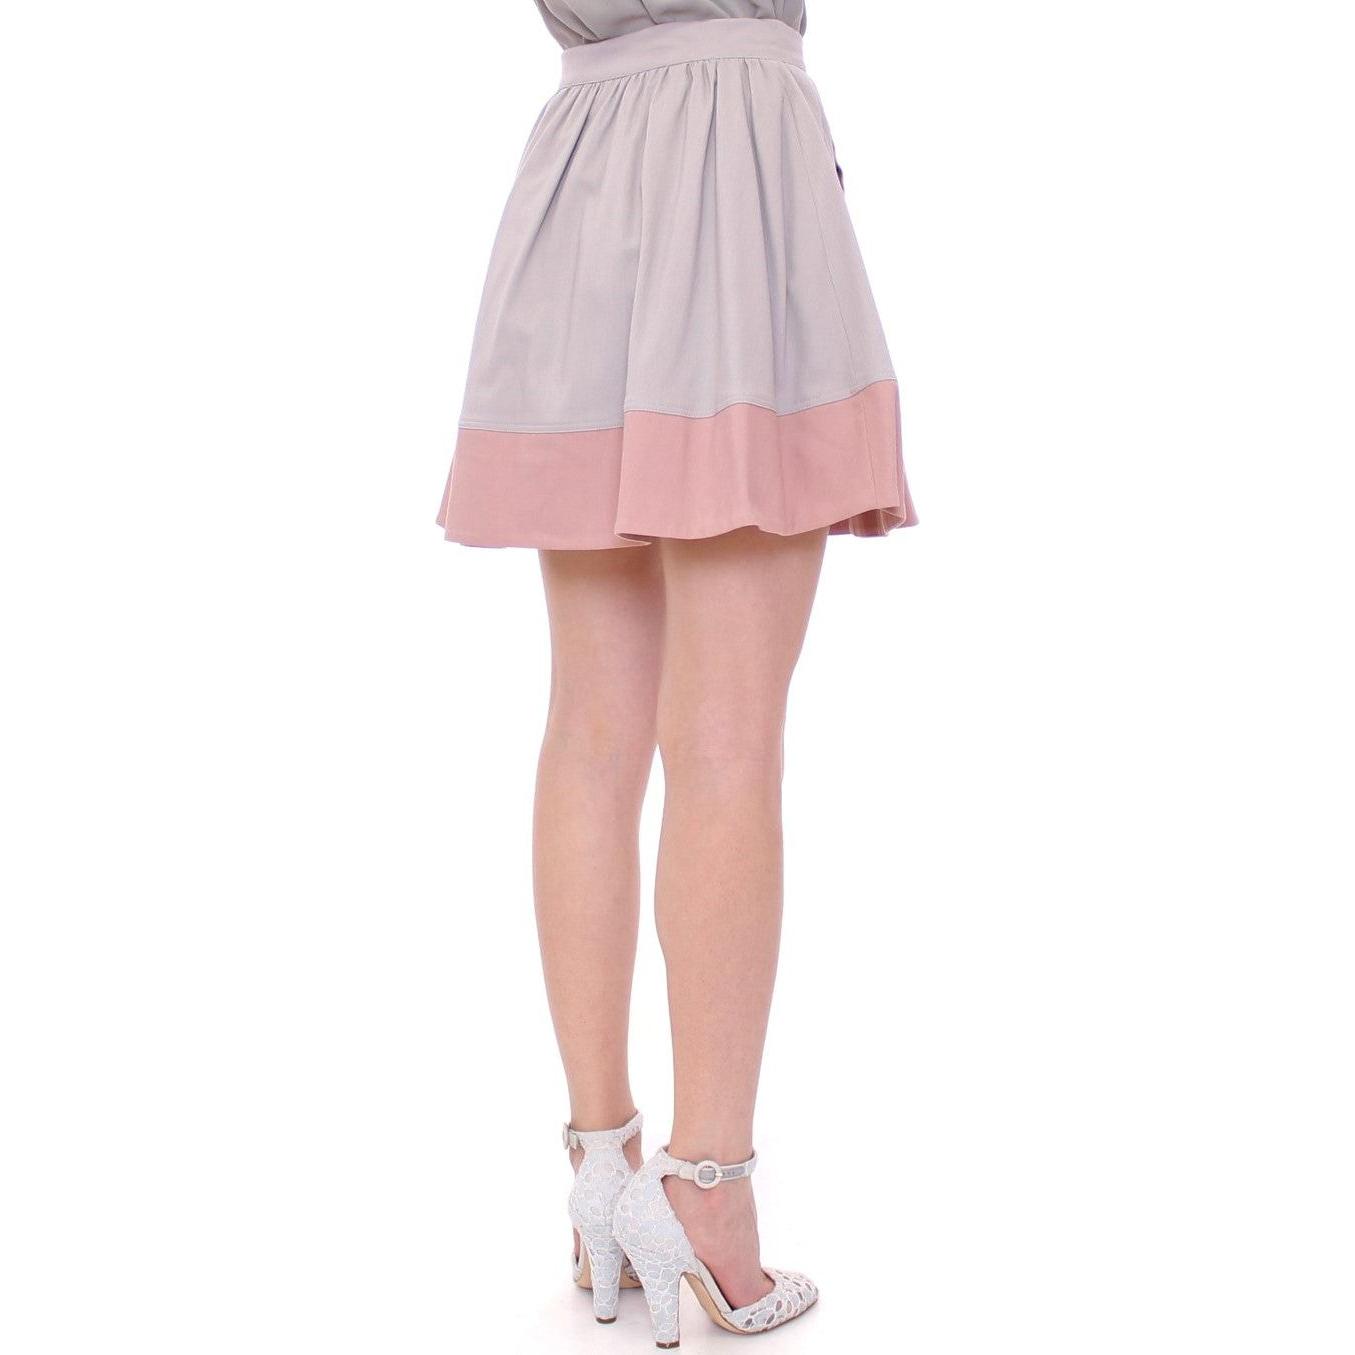 Comeforbreakfast Sleek Pleated Mini Skirt in Pink and Gray pink-gray-mini-short-pleated-skirt